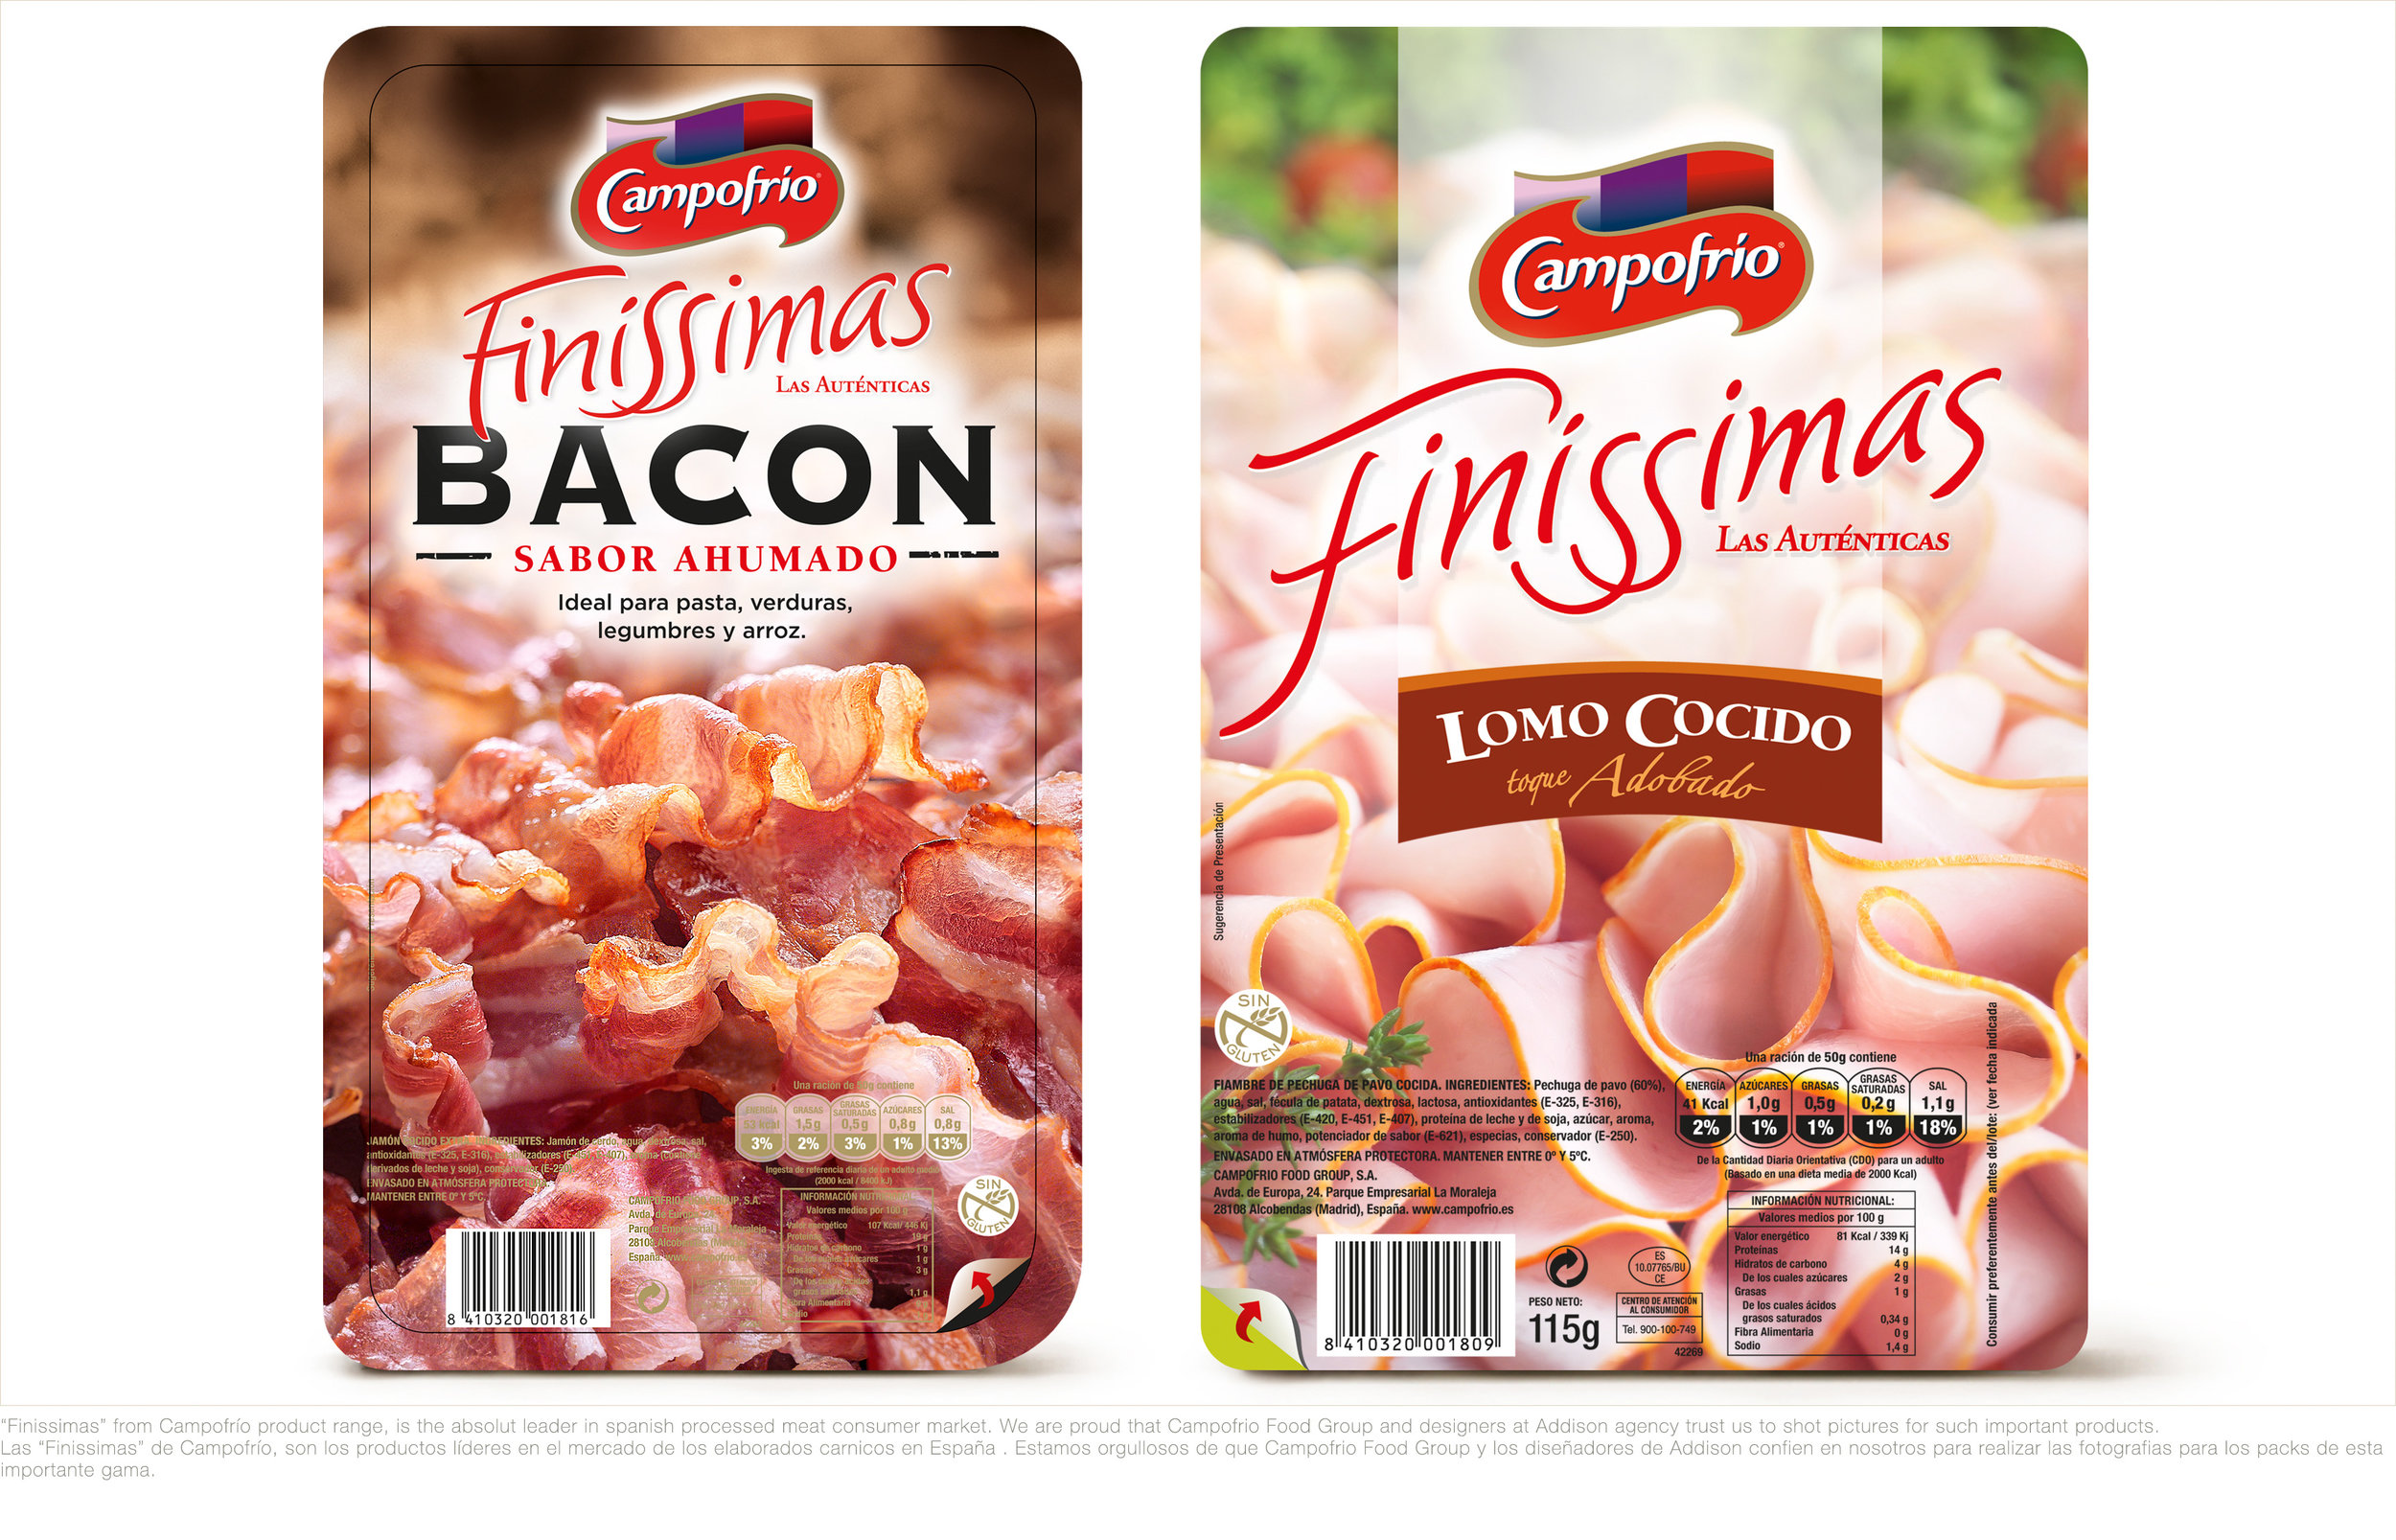 1539-1305Camp-Finissimas-Bacon-Lomo-03.jpg